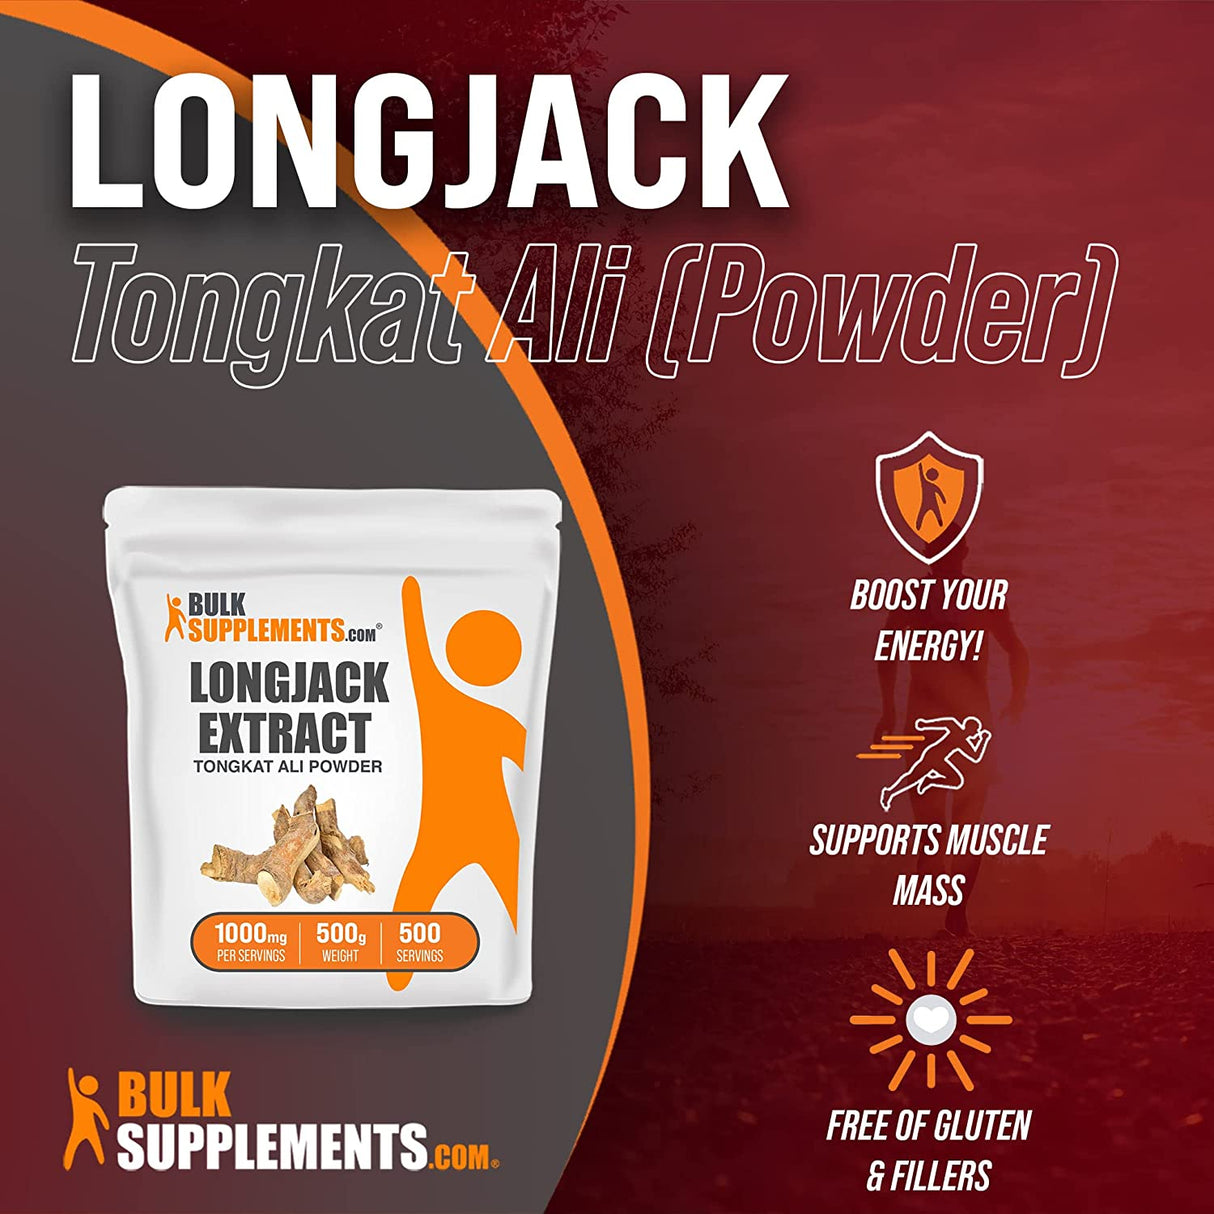 BulkSupplements Longjack Extract Powder Tongkat Ali Extract 1000Mg. 500G.